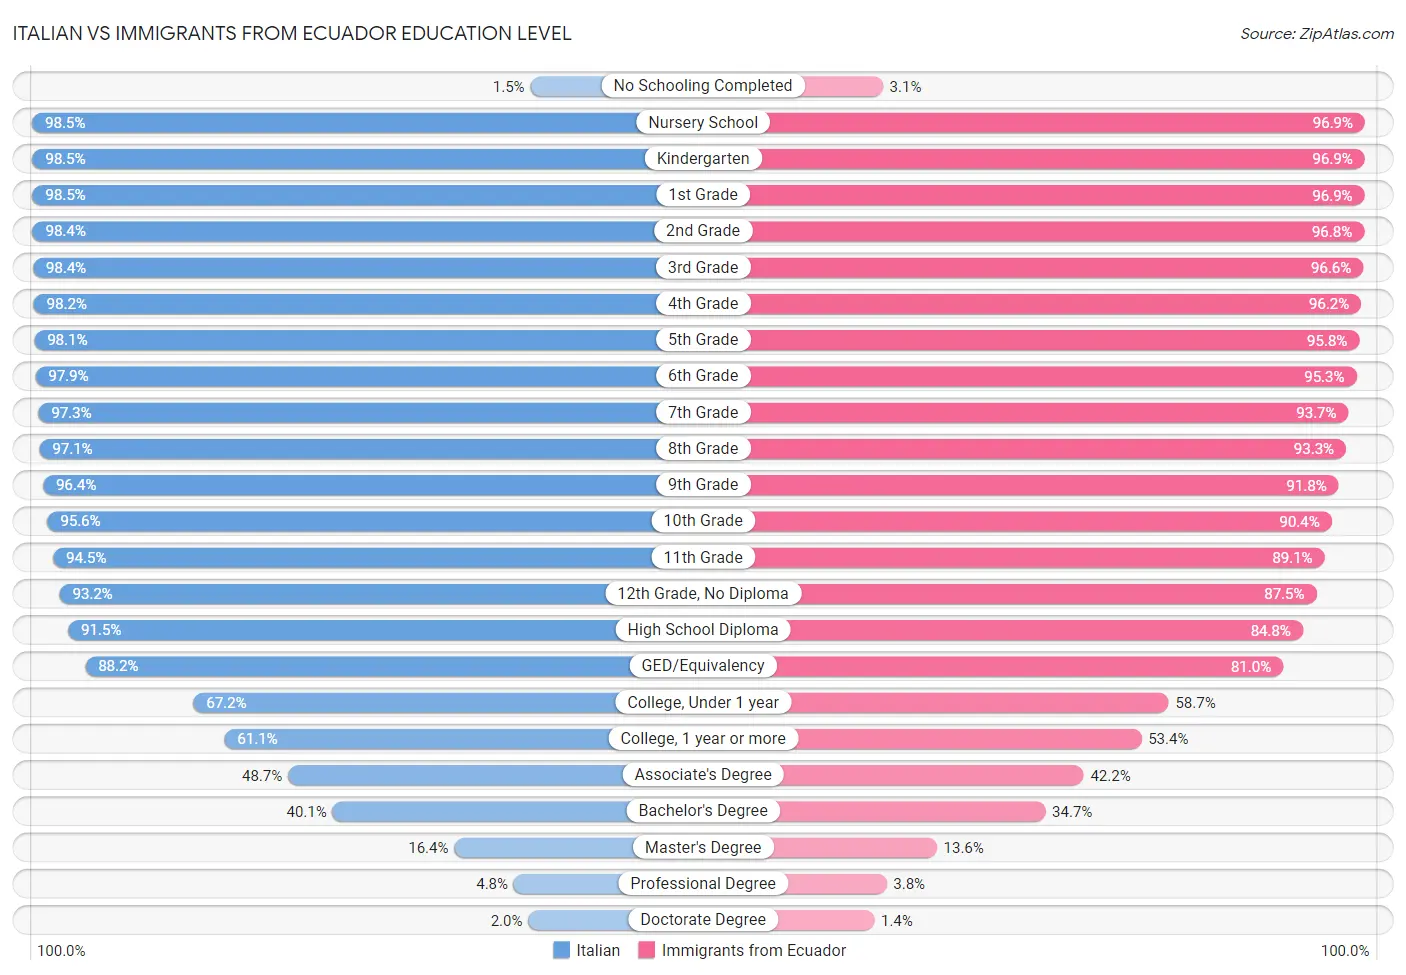 Italian vs Immigrants from Ecuador Education Level